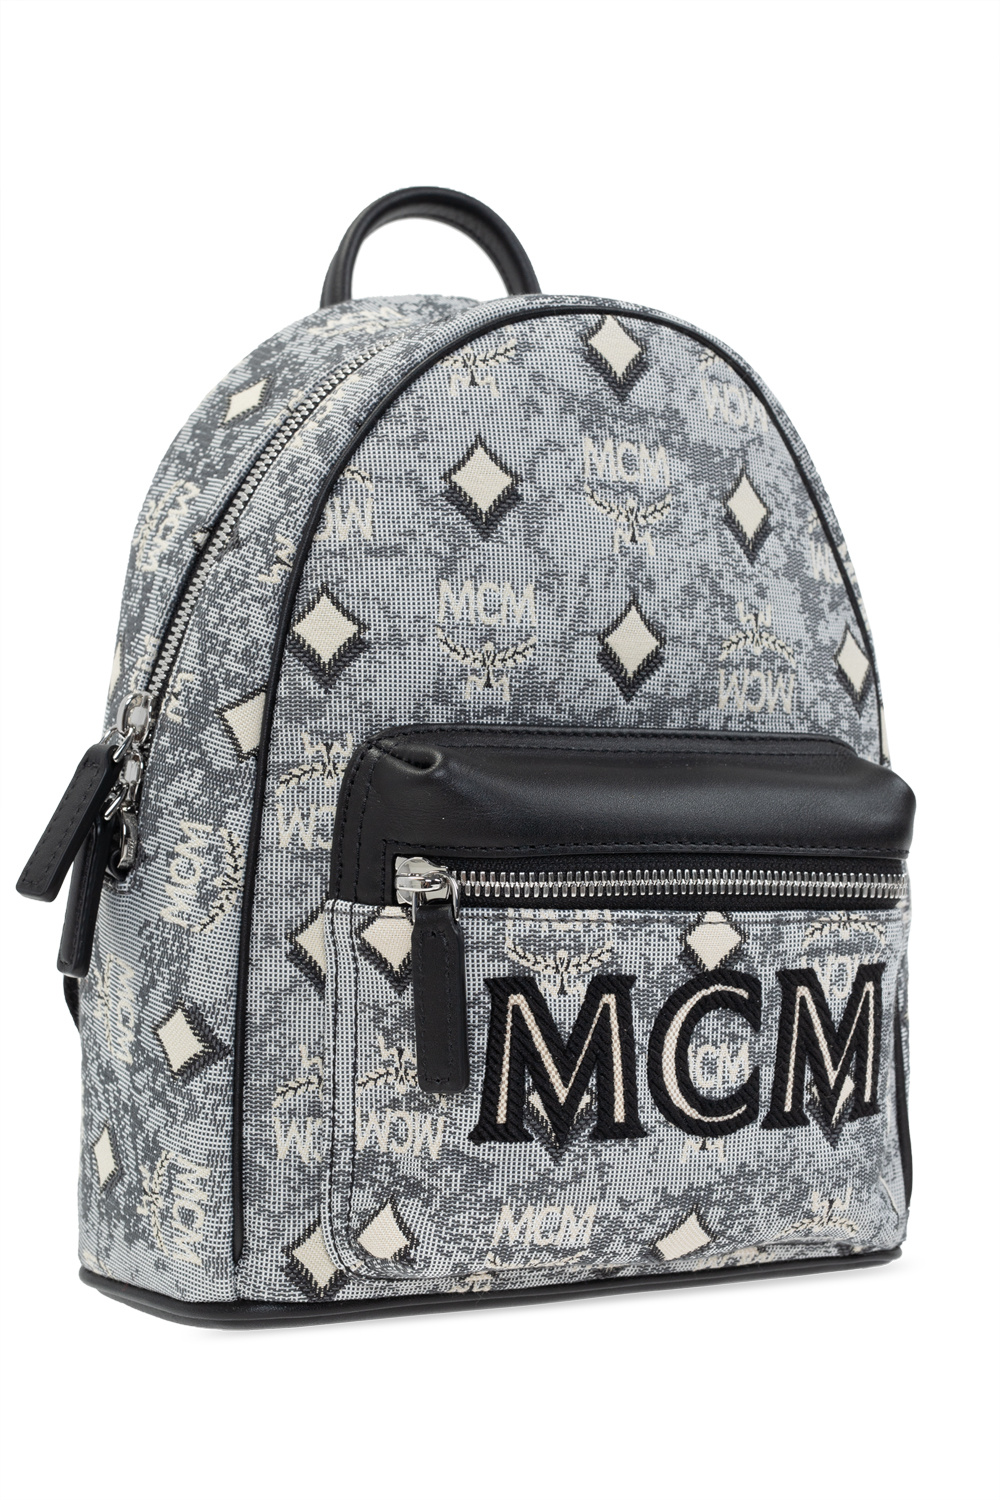 MCM Mini Vintage Jacquard Shoulder Bag Black Gray Cream